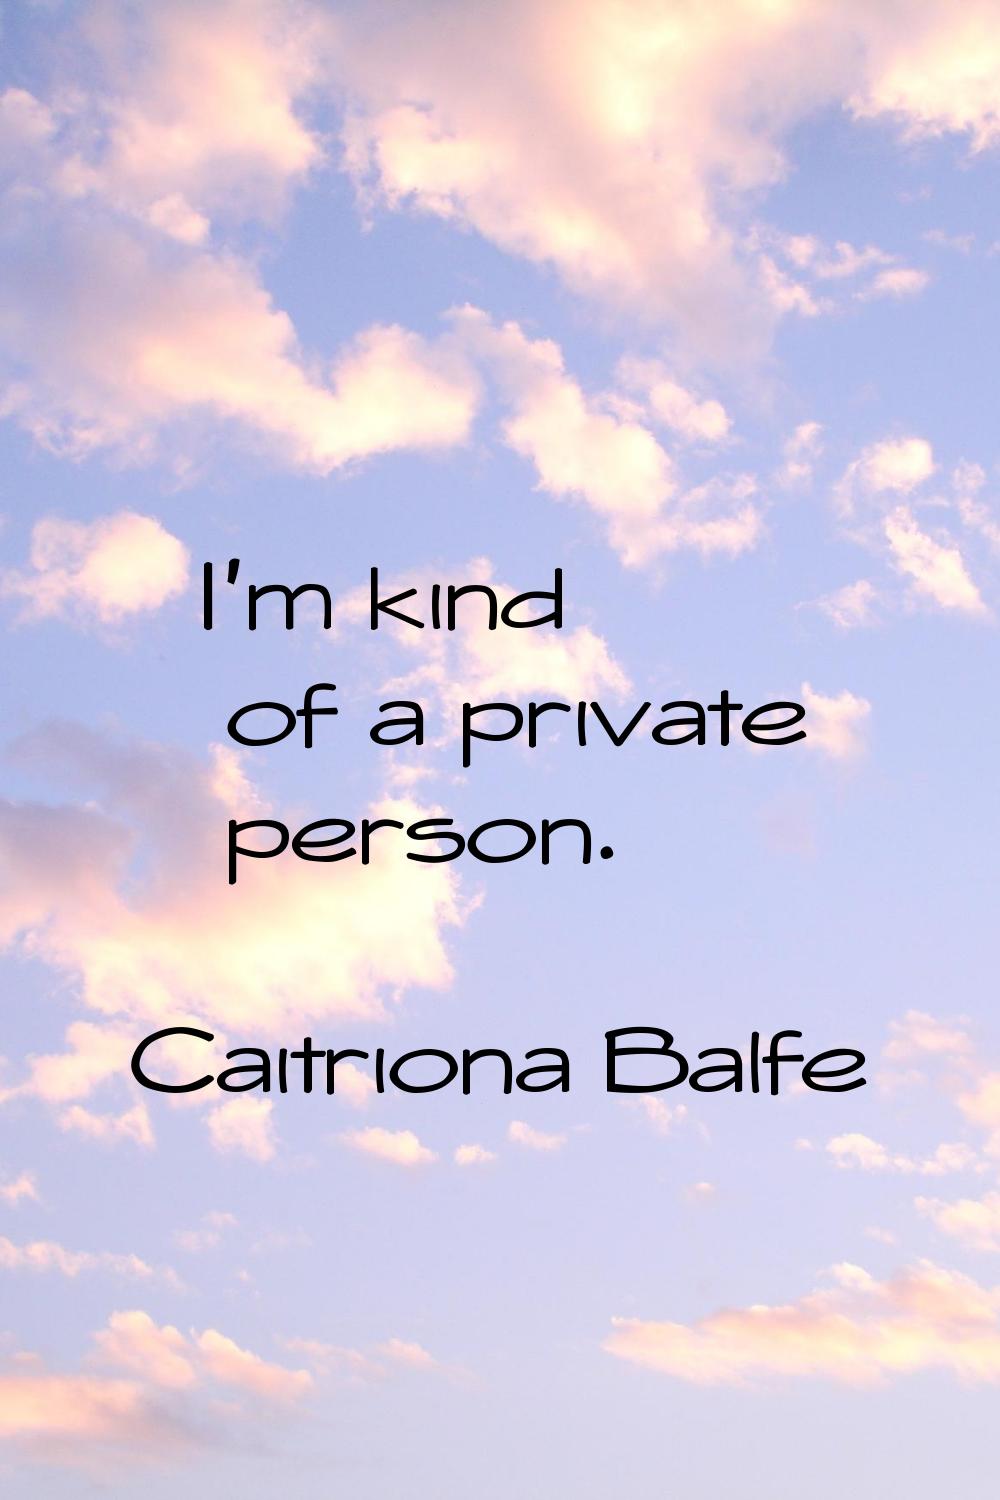 I'm kind of a private person.